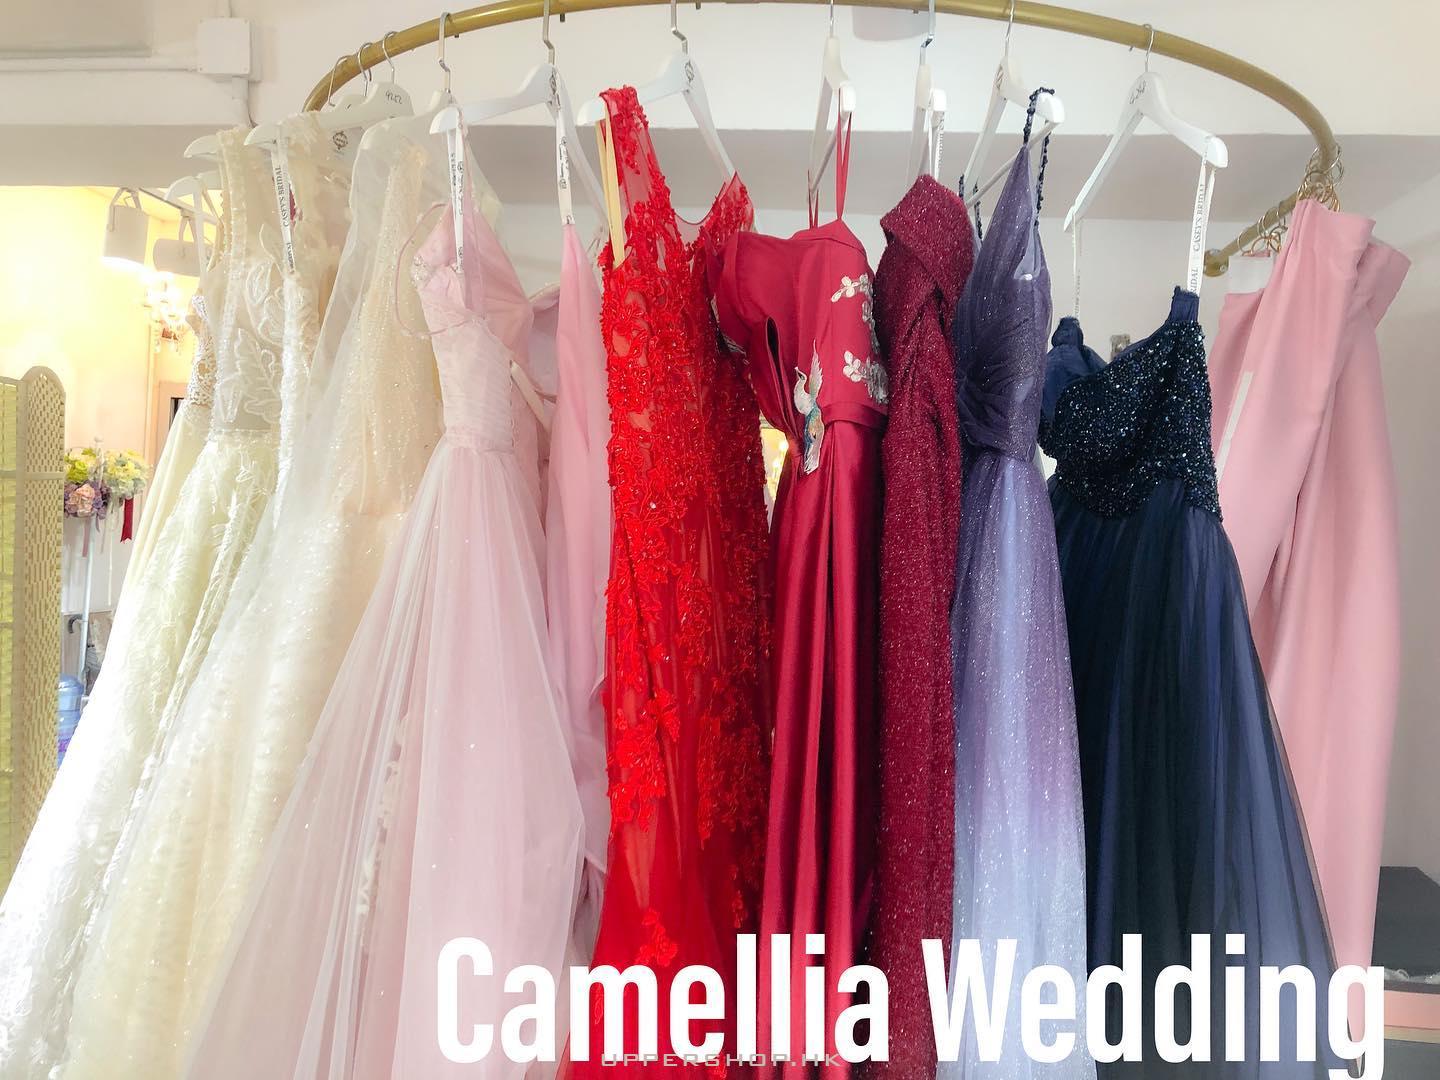 Camellia Wedding